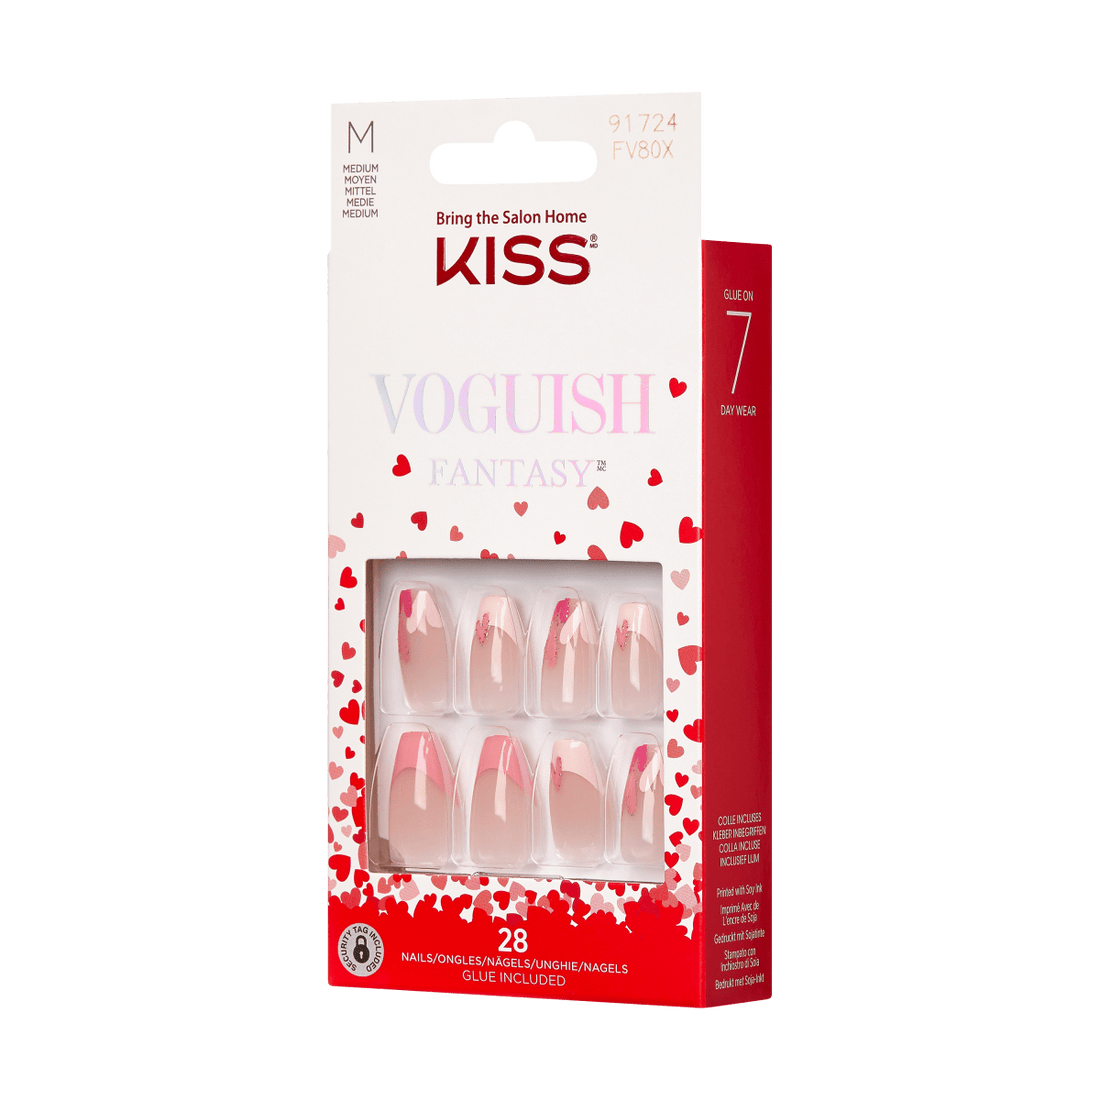 KISS Voguish Fantasy, Press-On Nails, Pink Drinks, Pink, Med Coffin, 28ct